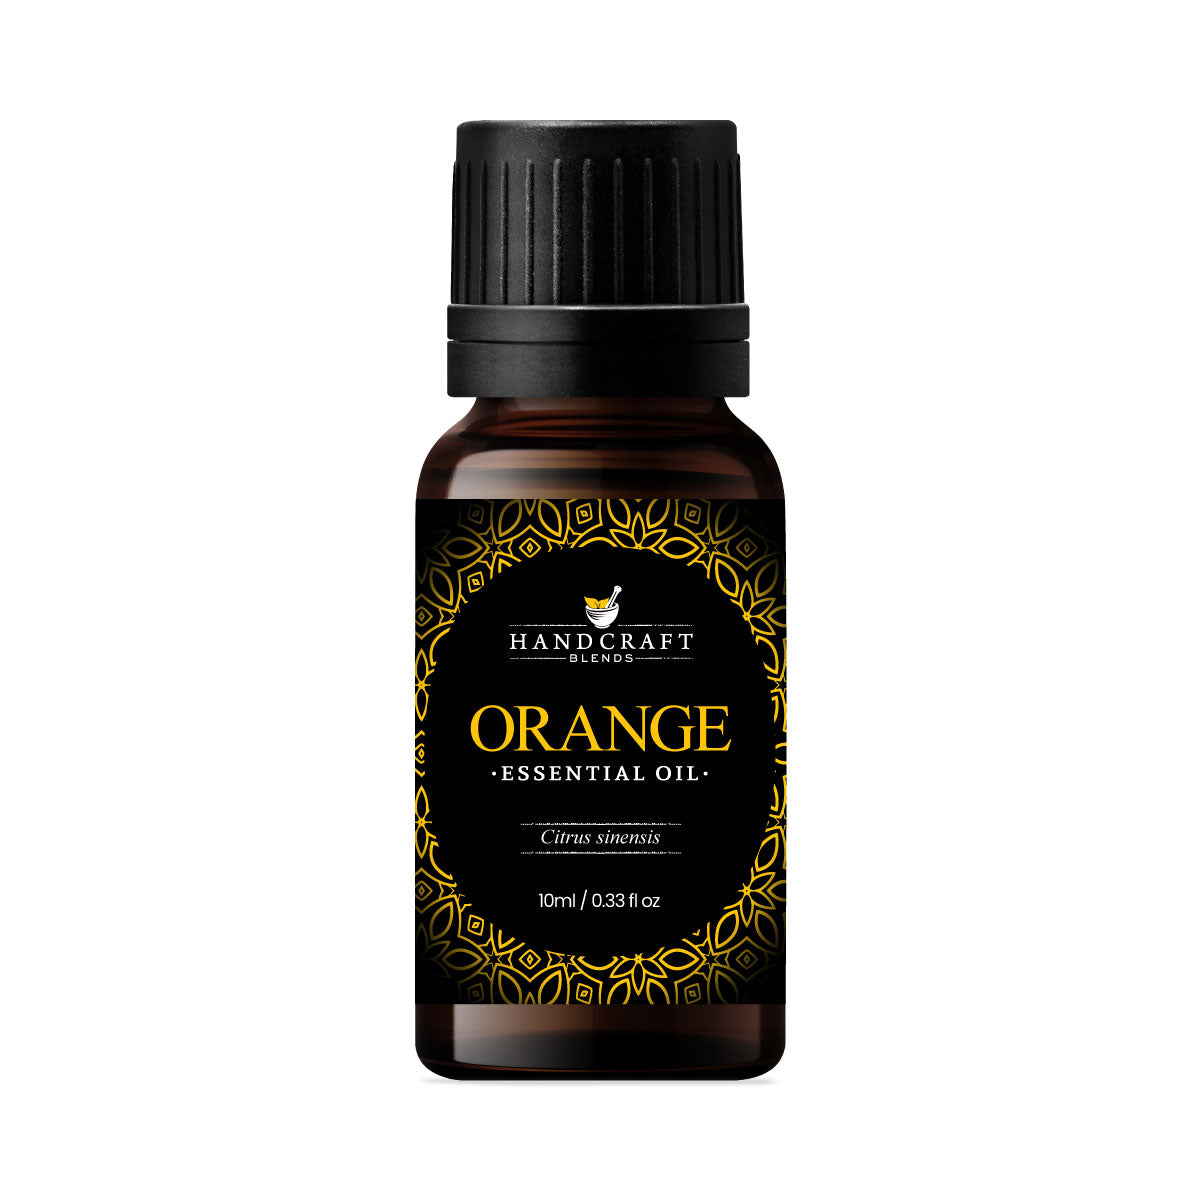 1pc EUQEE Sweet Orange Essential Oils 118ML/4.0Fl.Oz, Premium Quality  Essential Oils Diffuser, Candle Making, Lipgloss Making